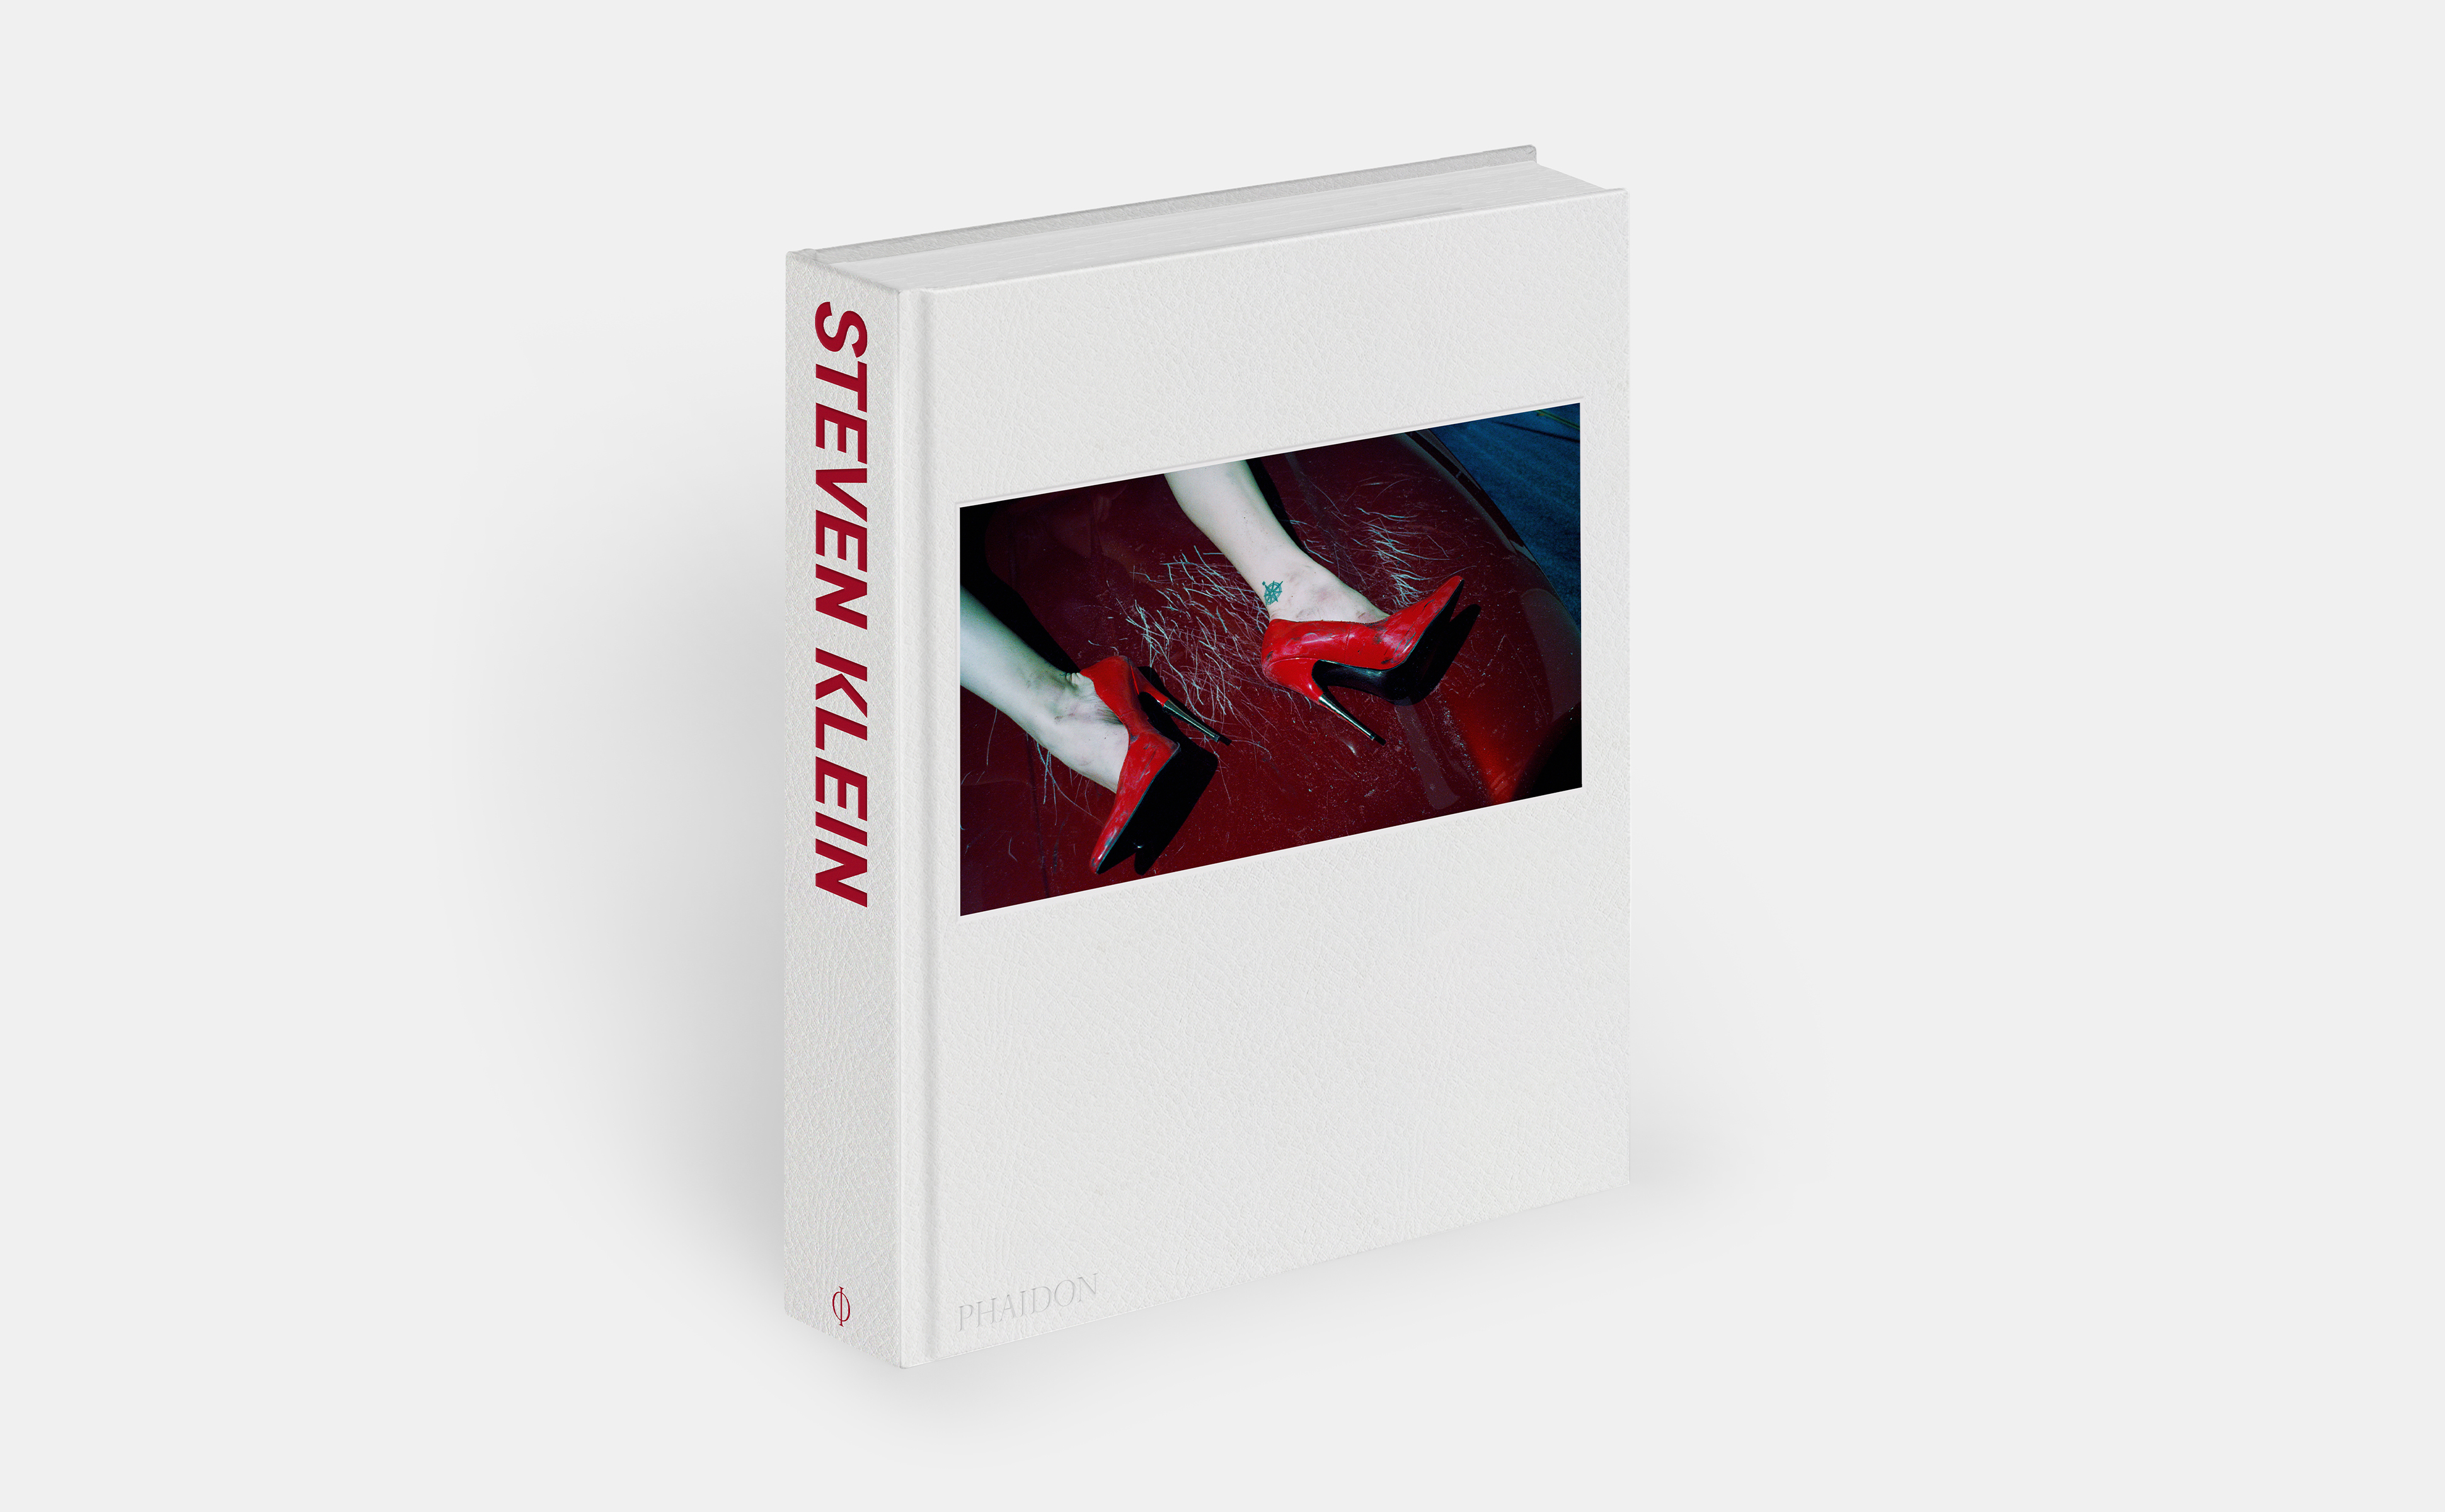 Phaidon's new Steven Klein monograph